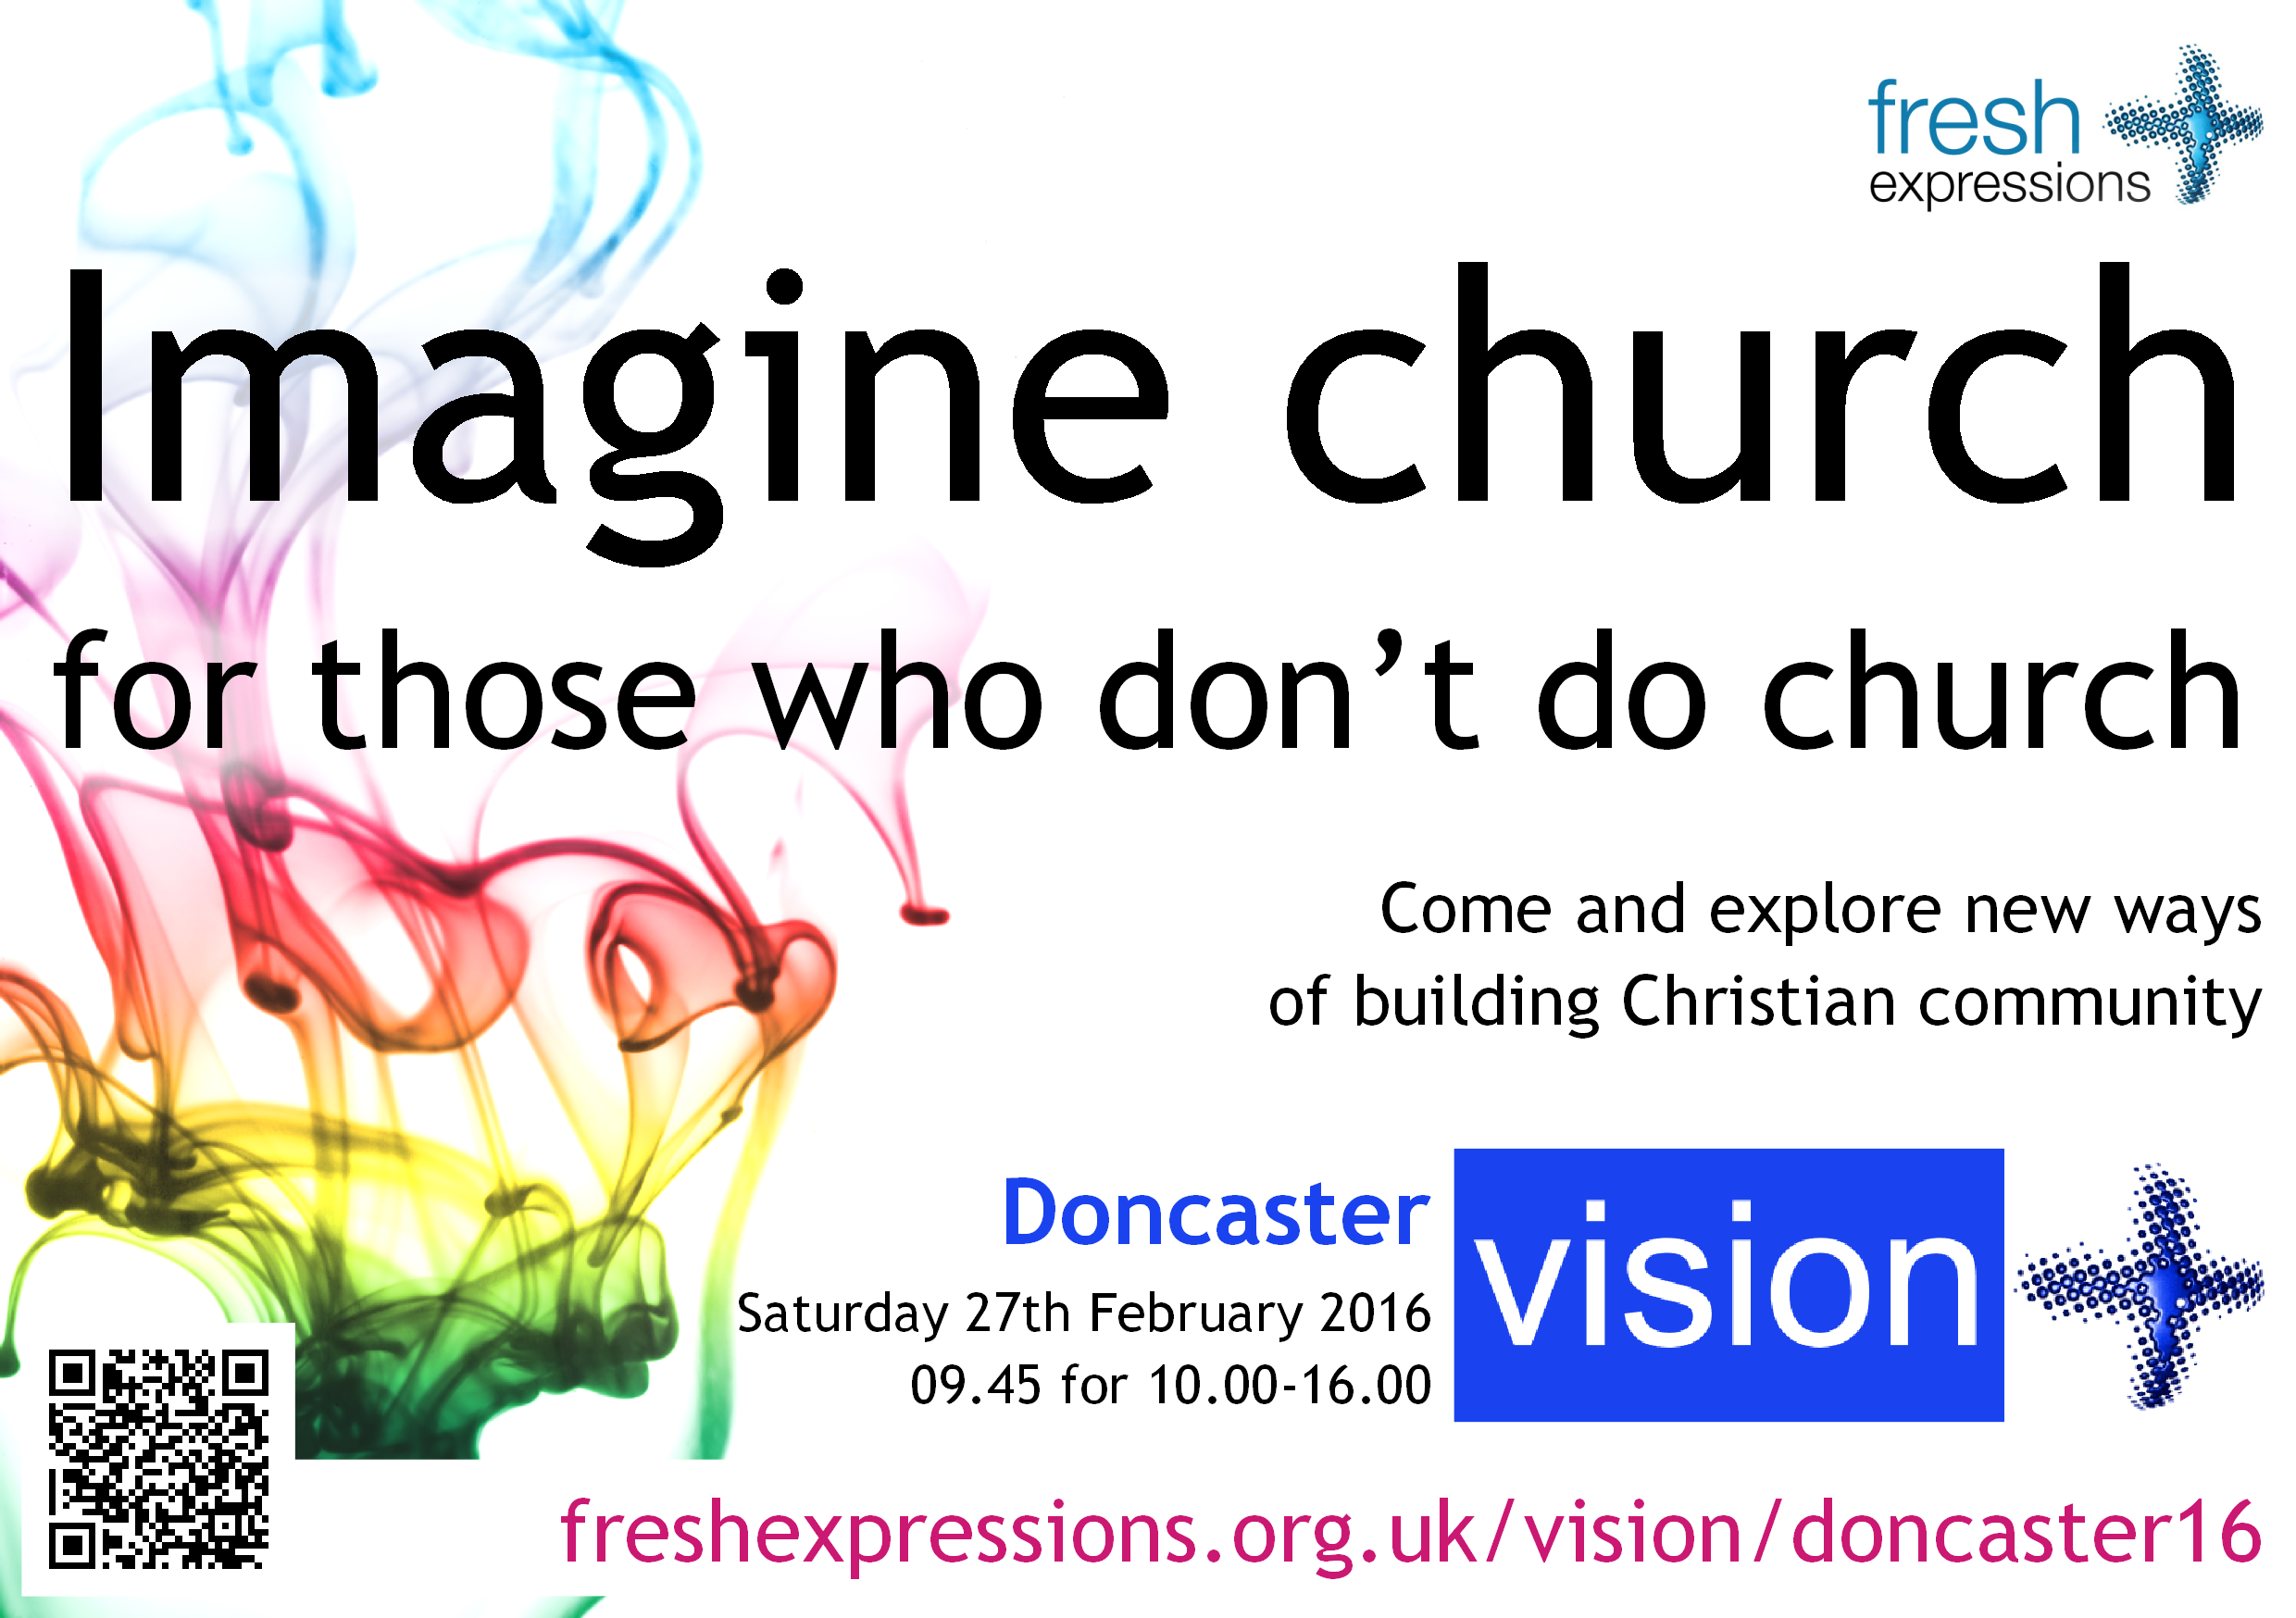 Doncaster vision event